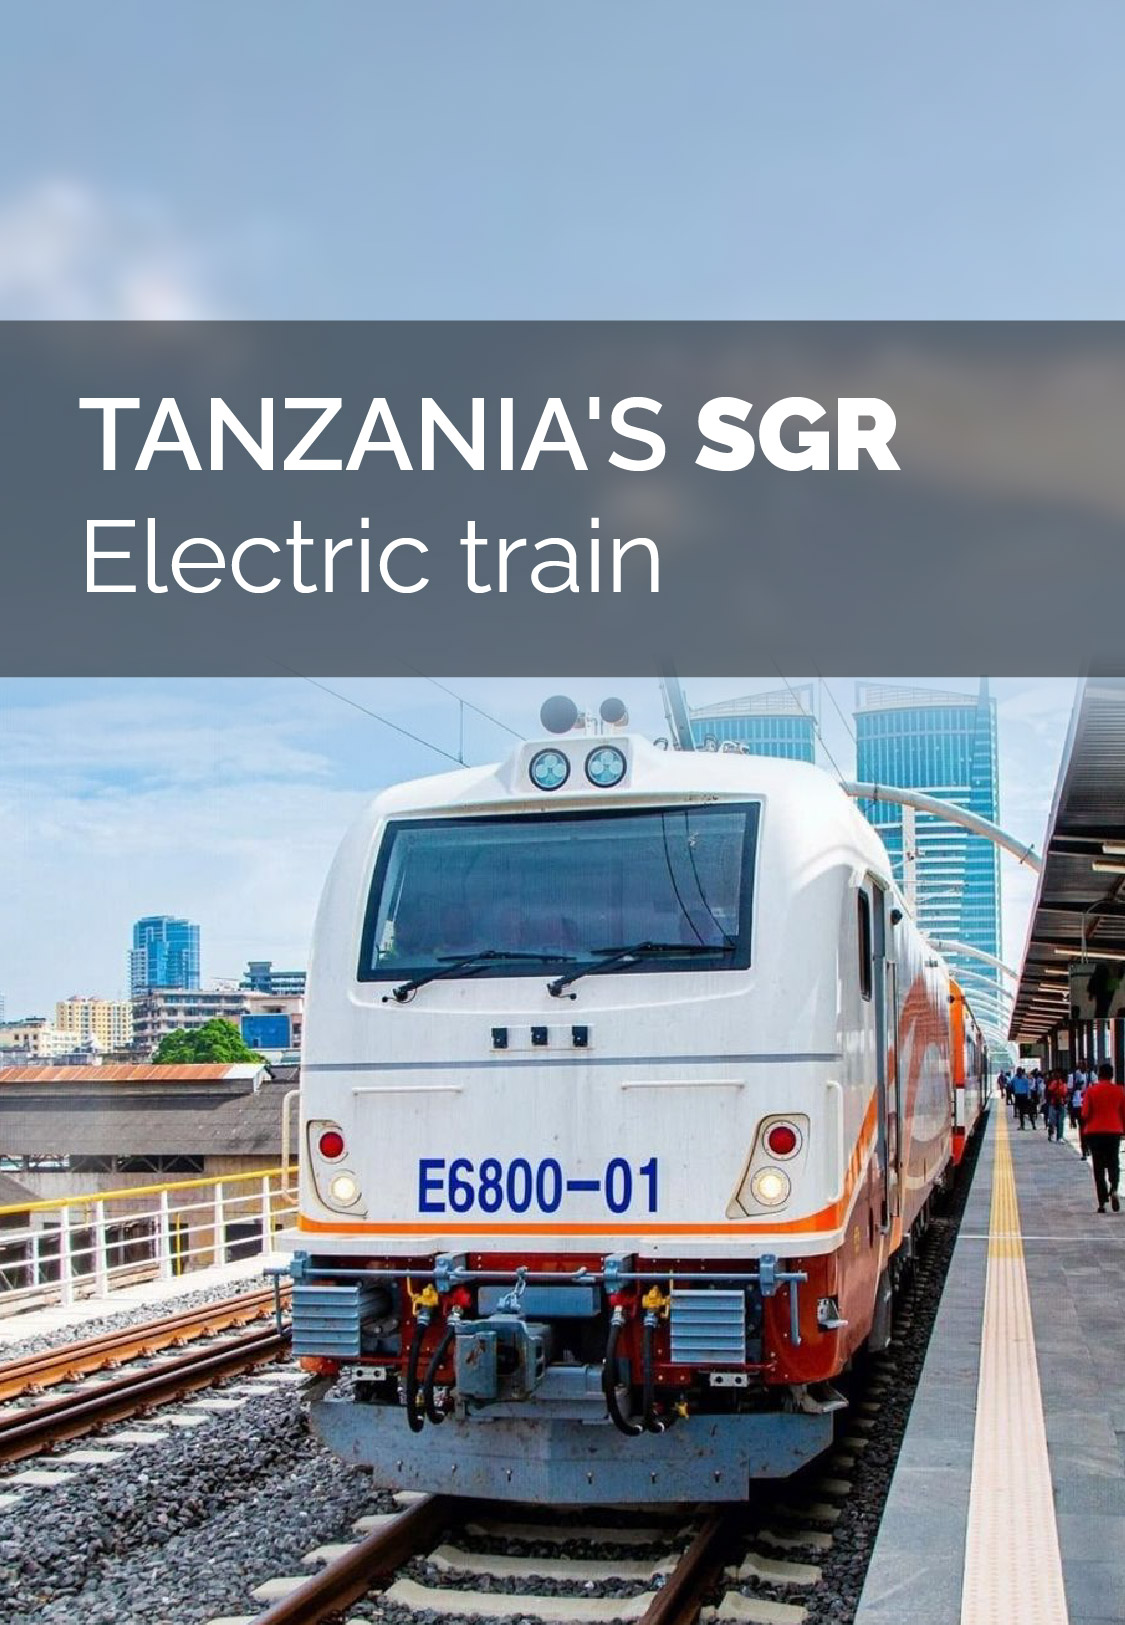 Tanzania's Electric train.